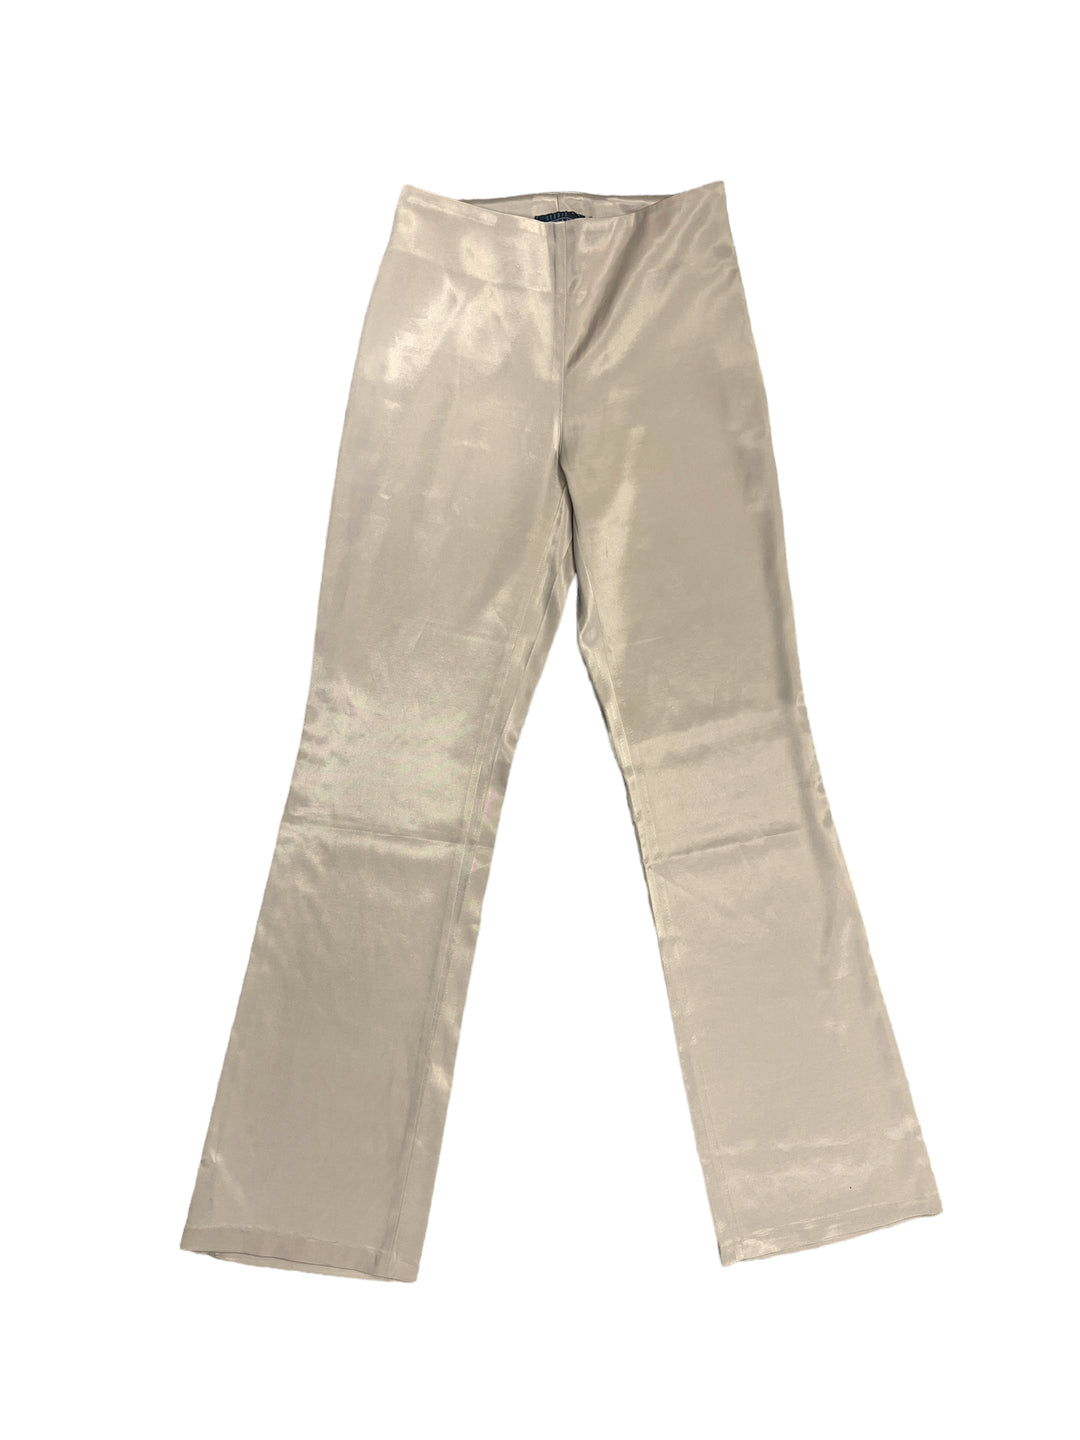 Vintage Gold Shiny Pants Women’s Small(34)